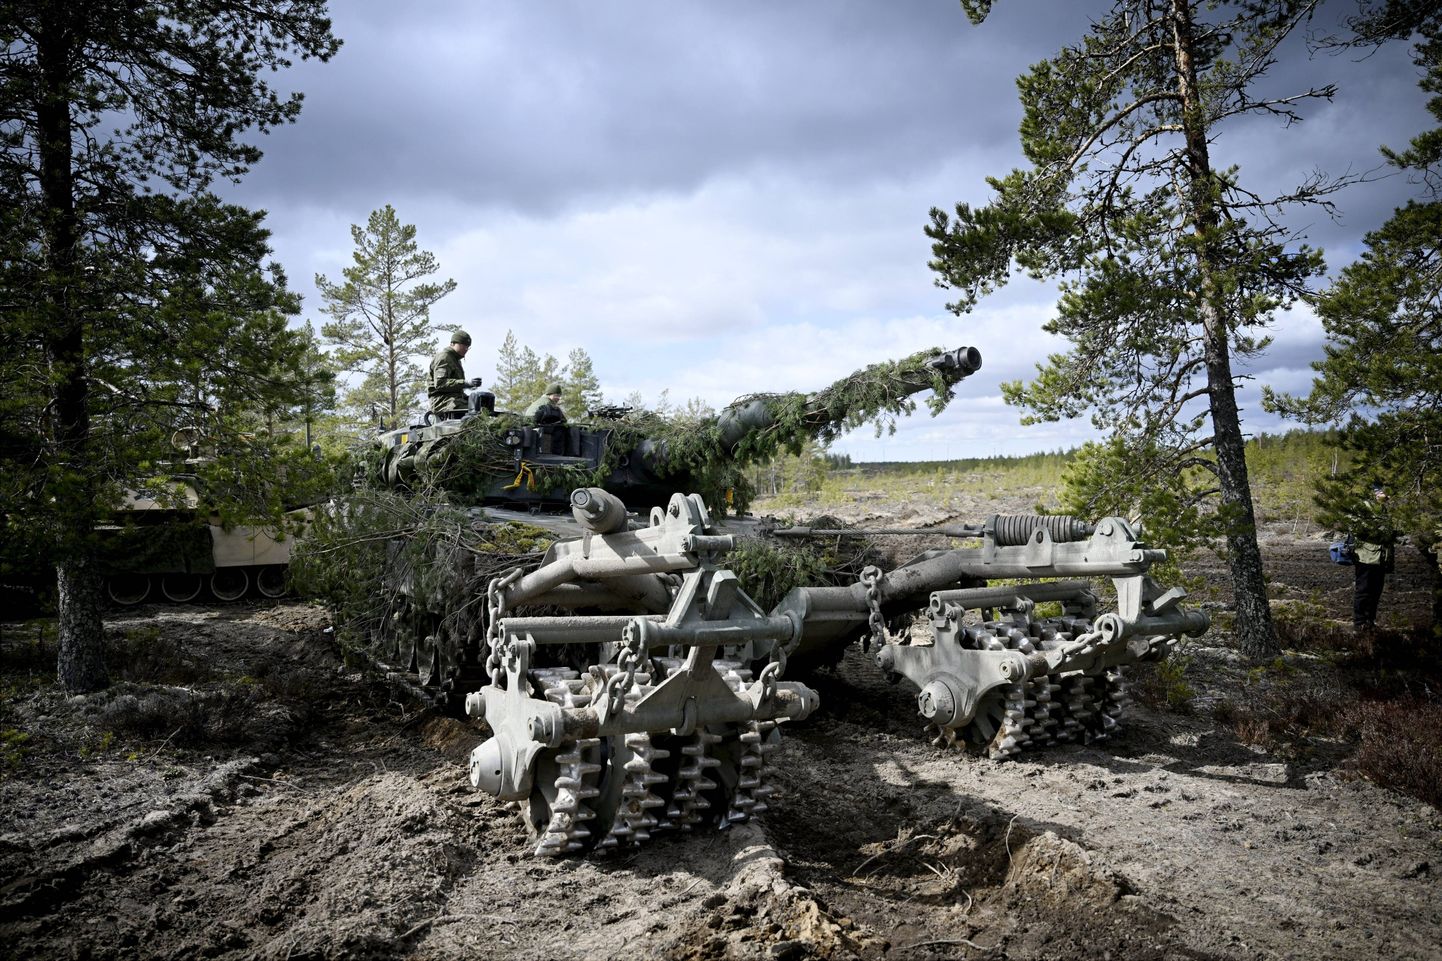 Soome kaitsejõudude tank riigi lääneosas Kankaanpääl.